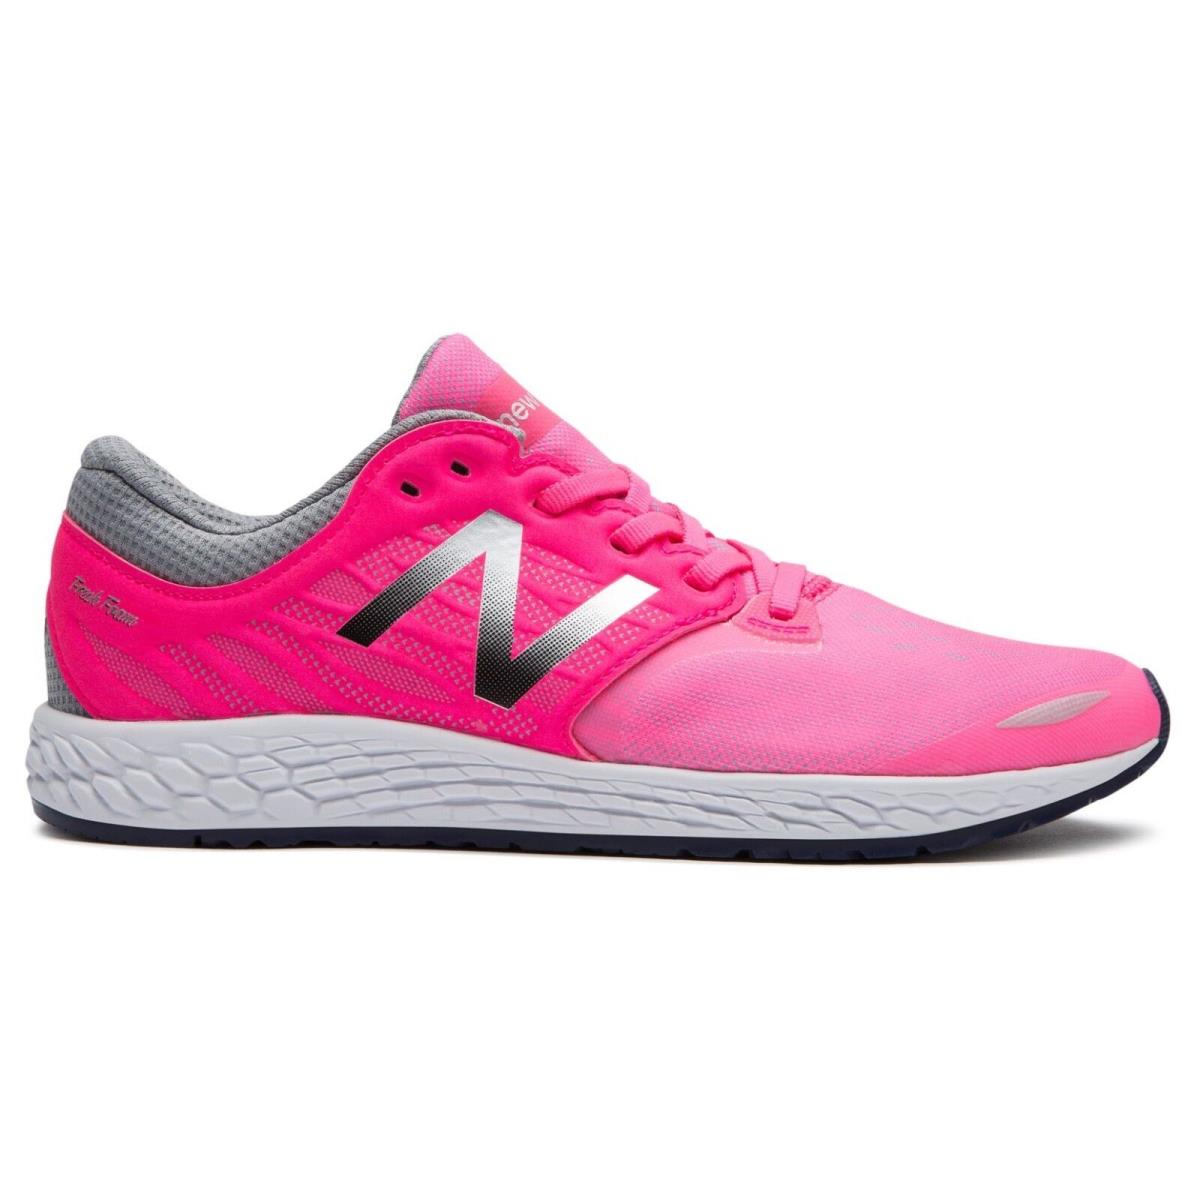 New Balance Fresh Foam Zante v3 Pink Running Kids Shoe N4059 Size 5.5 W